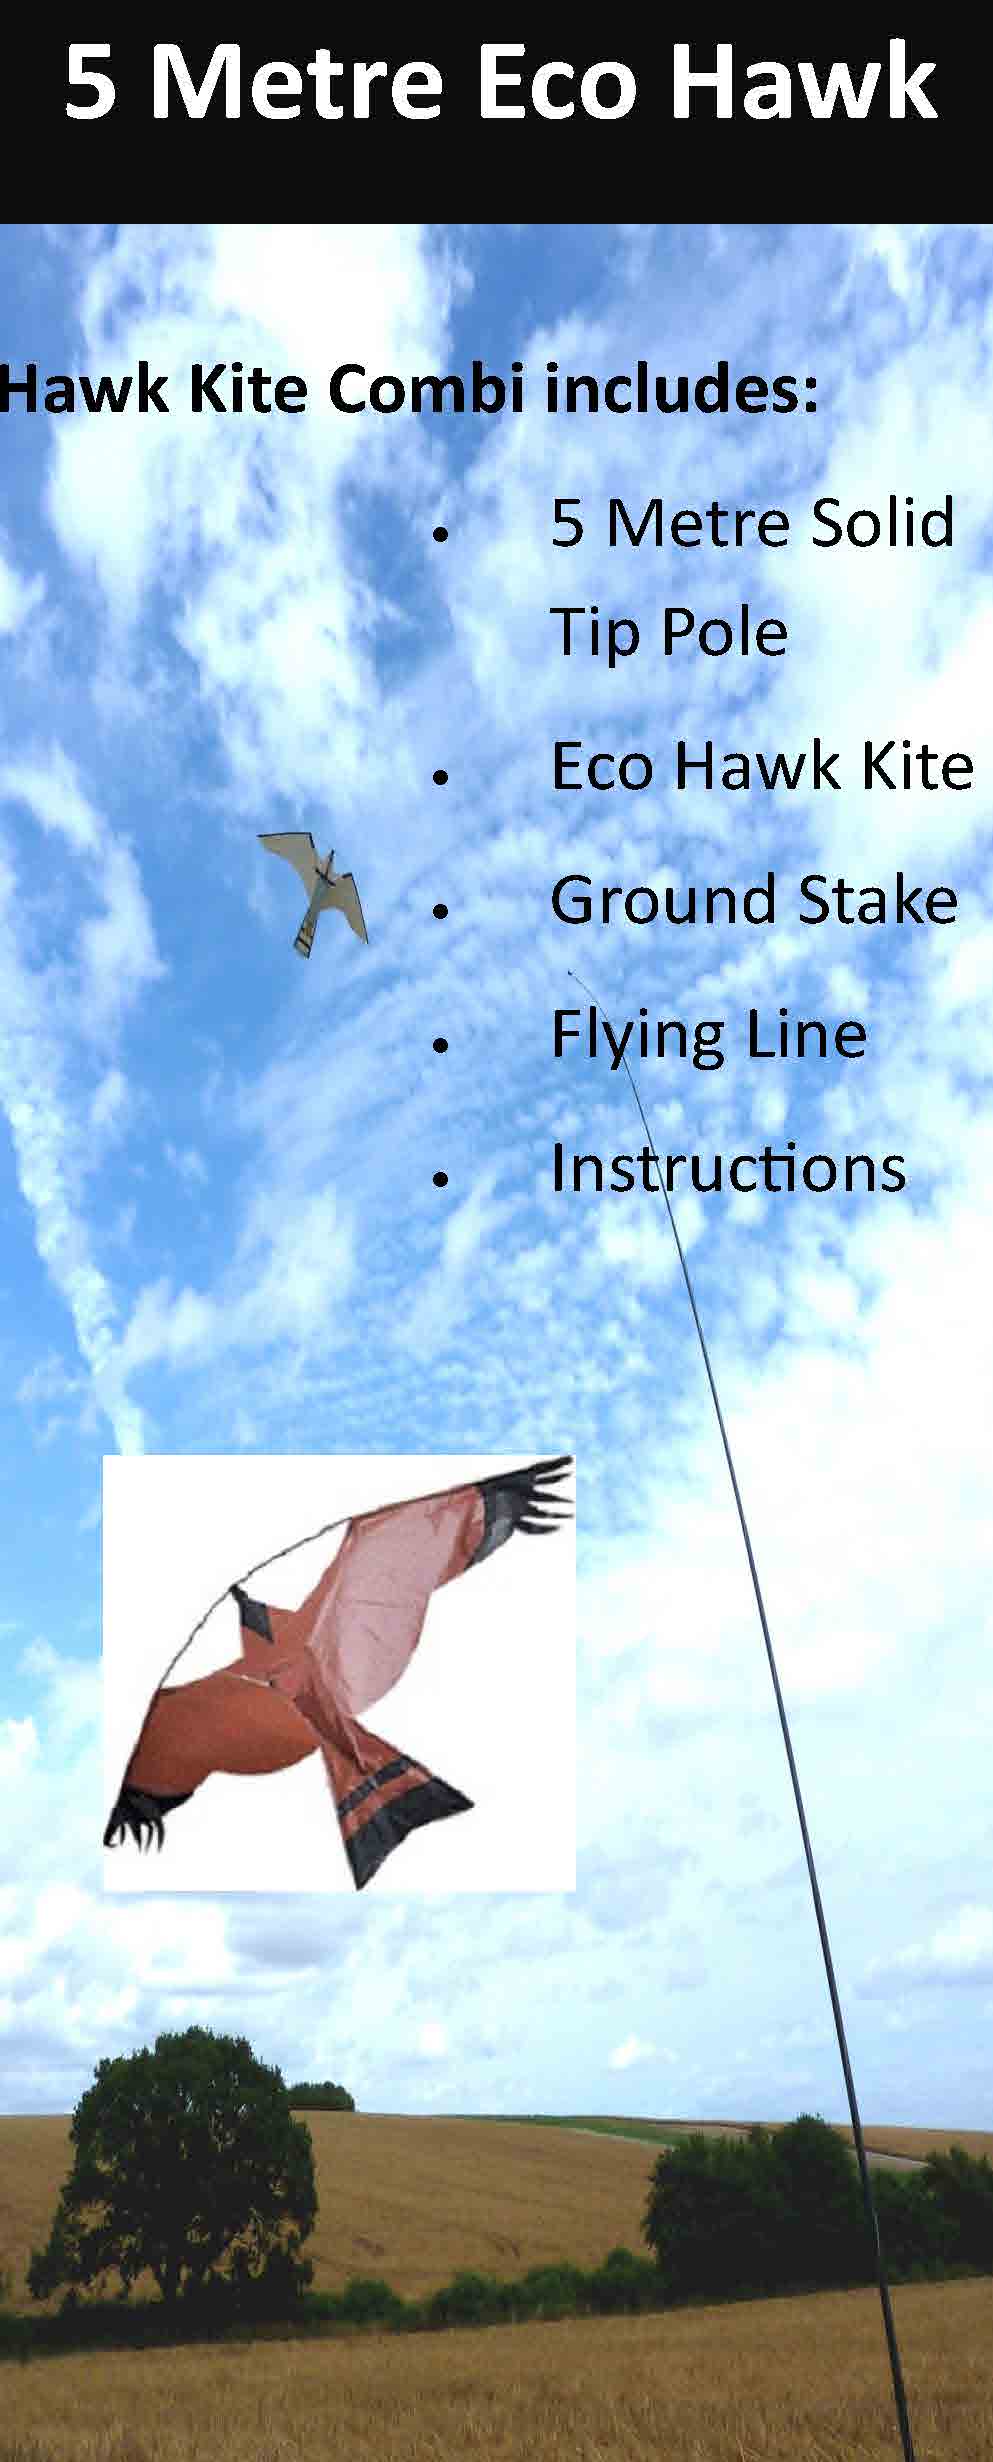 Eco Hawk Kite 